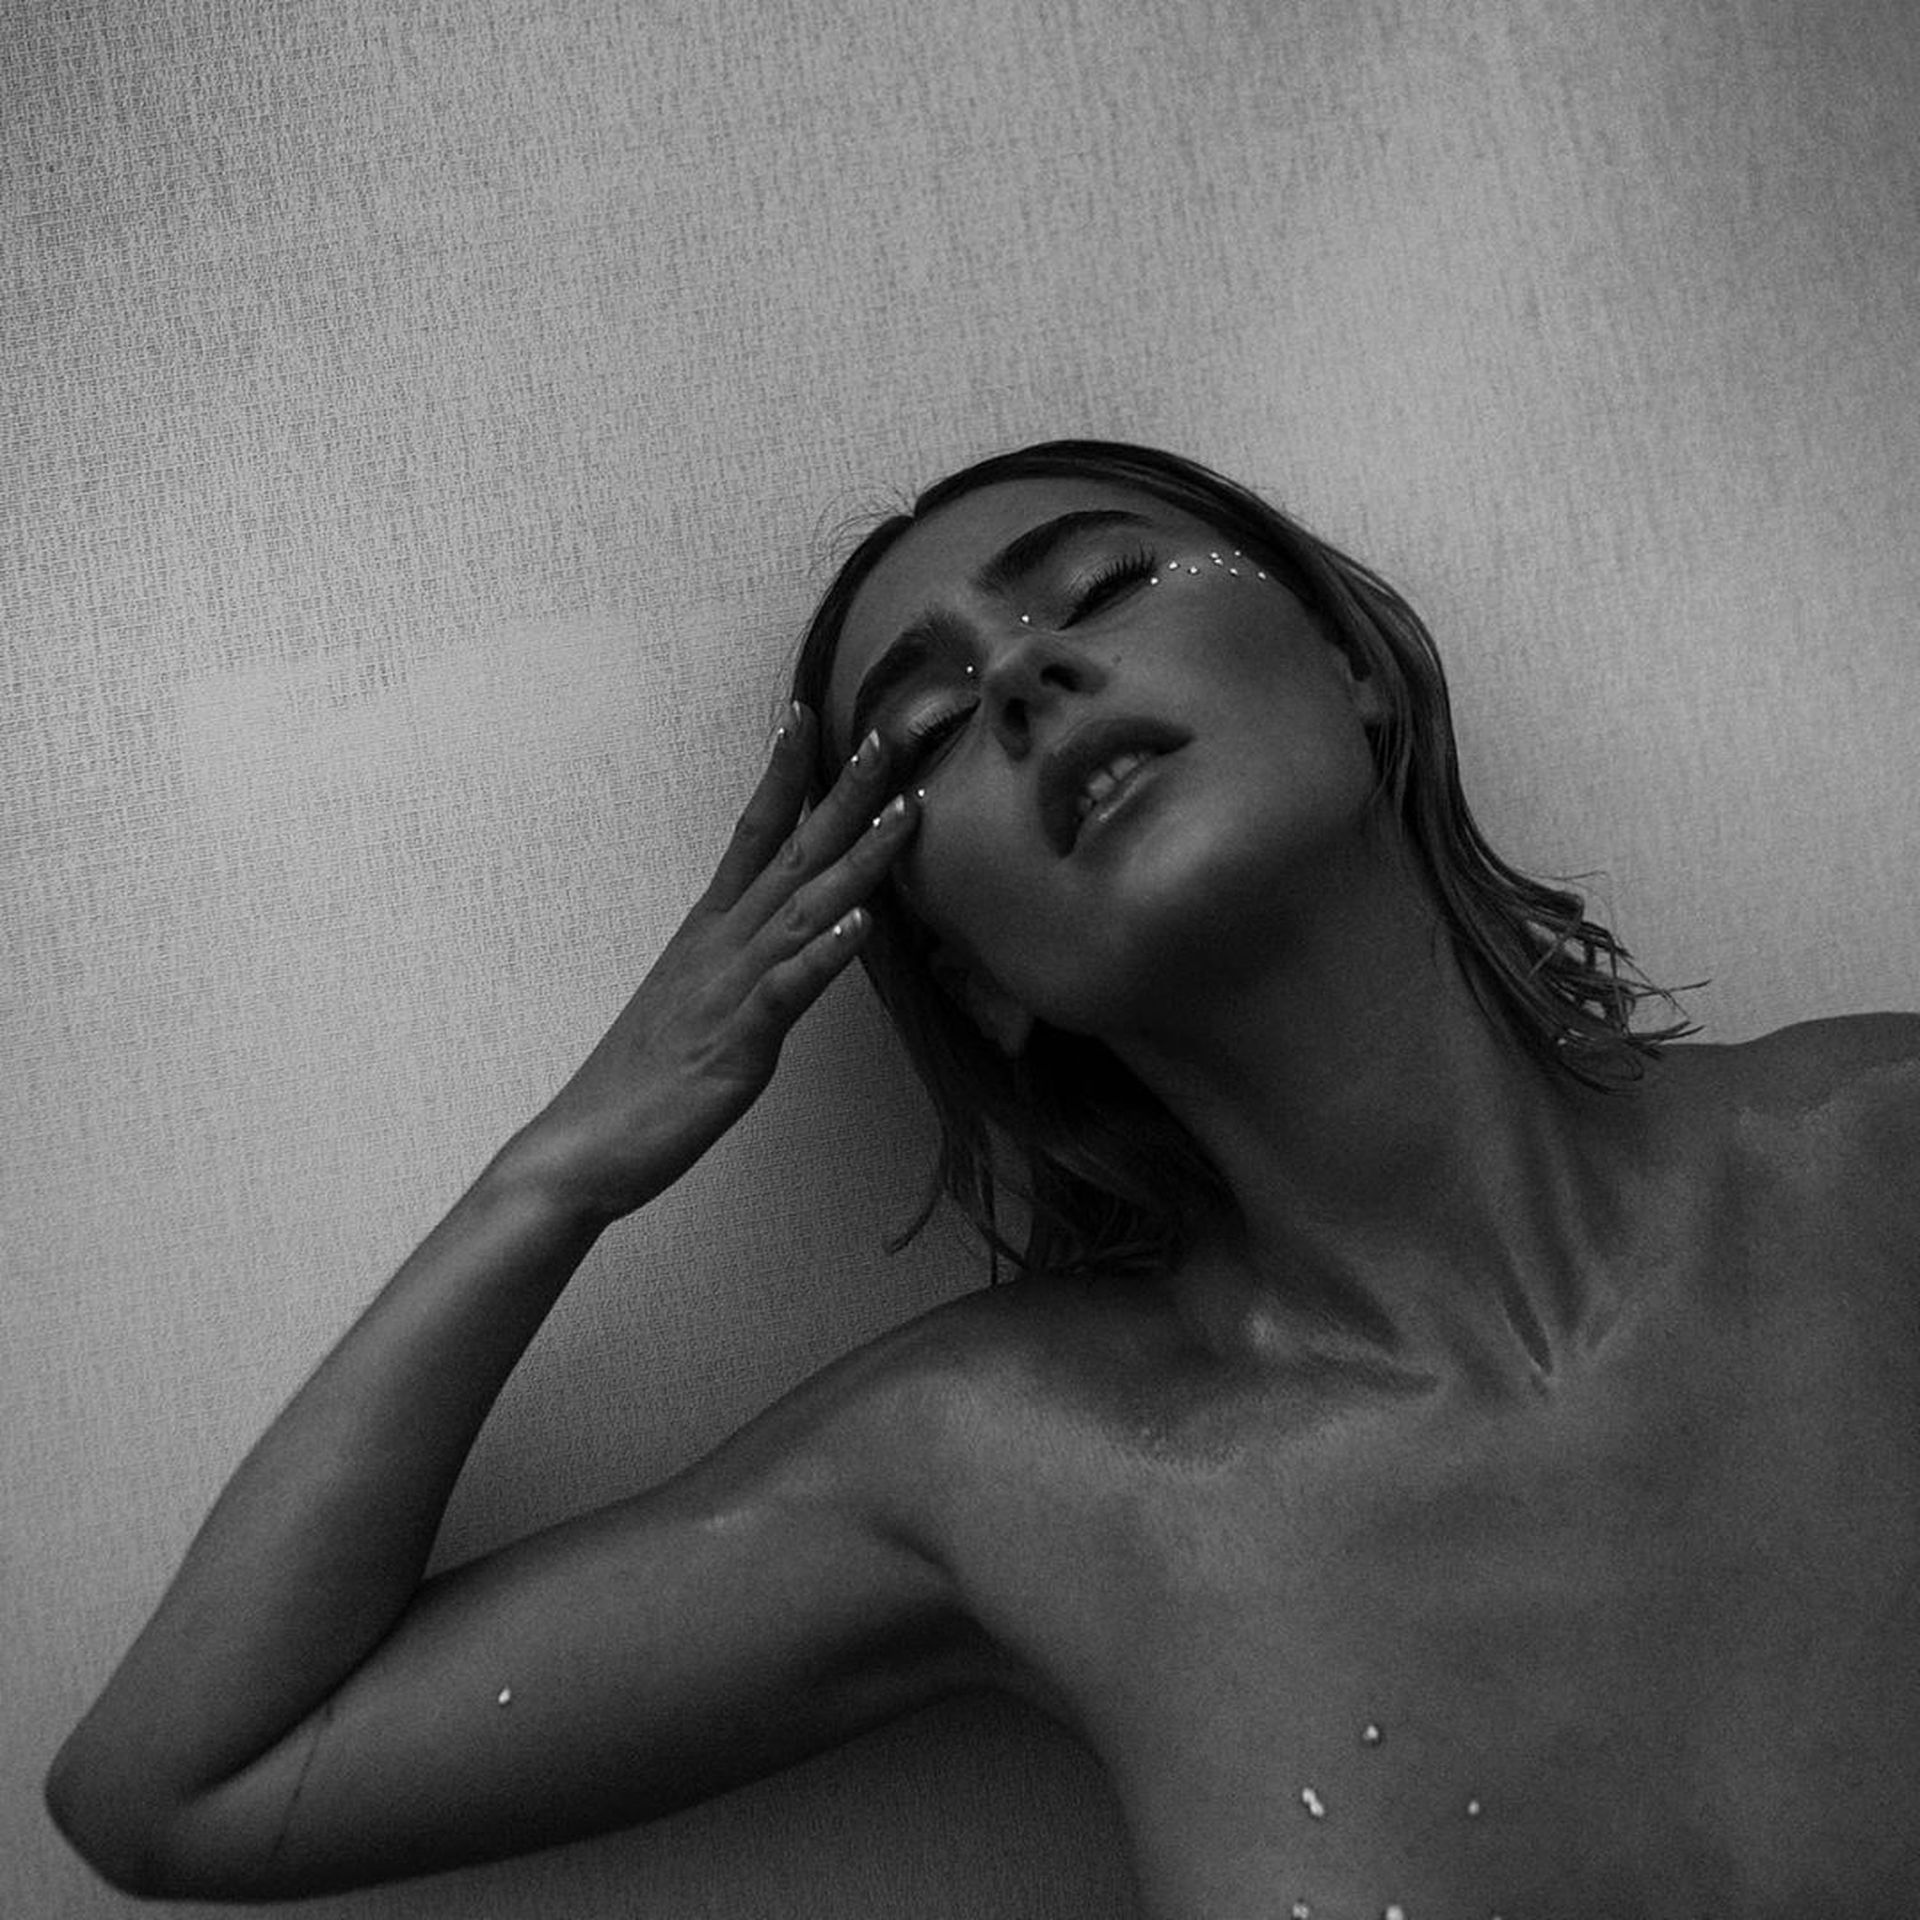 Stefanie Giesinger Topless & Sexy (21 Photos)